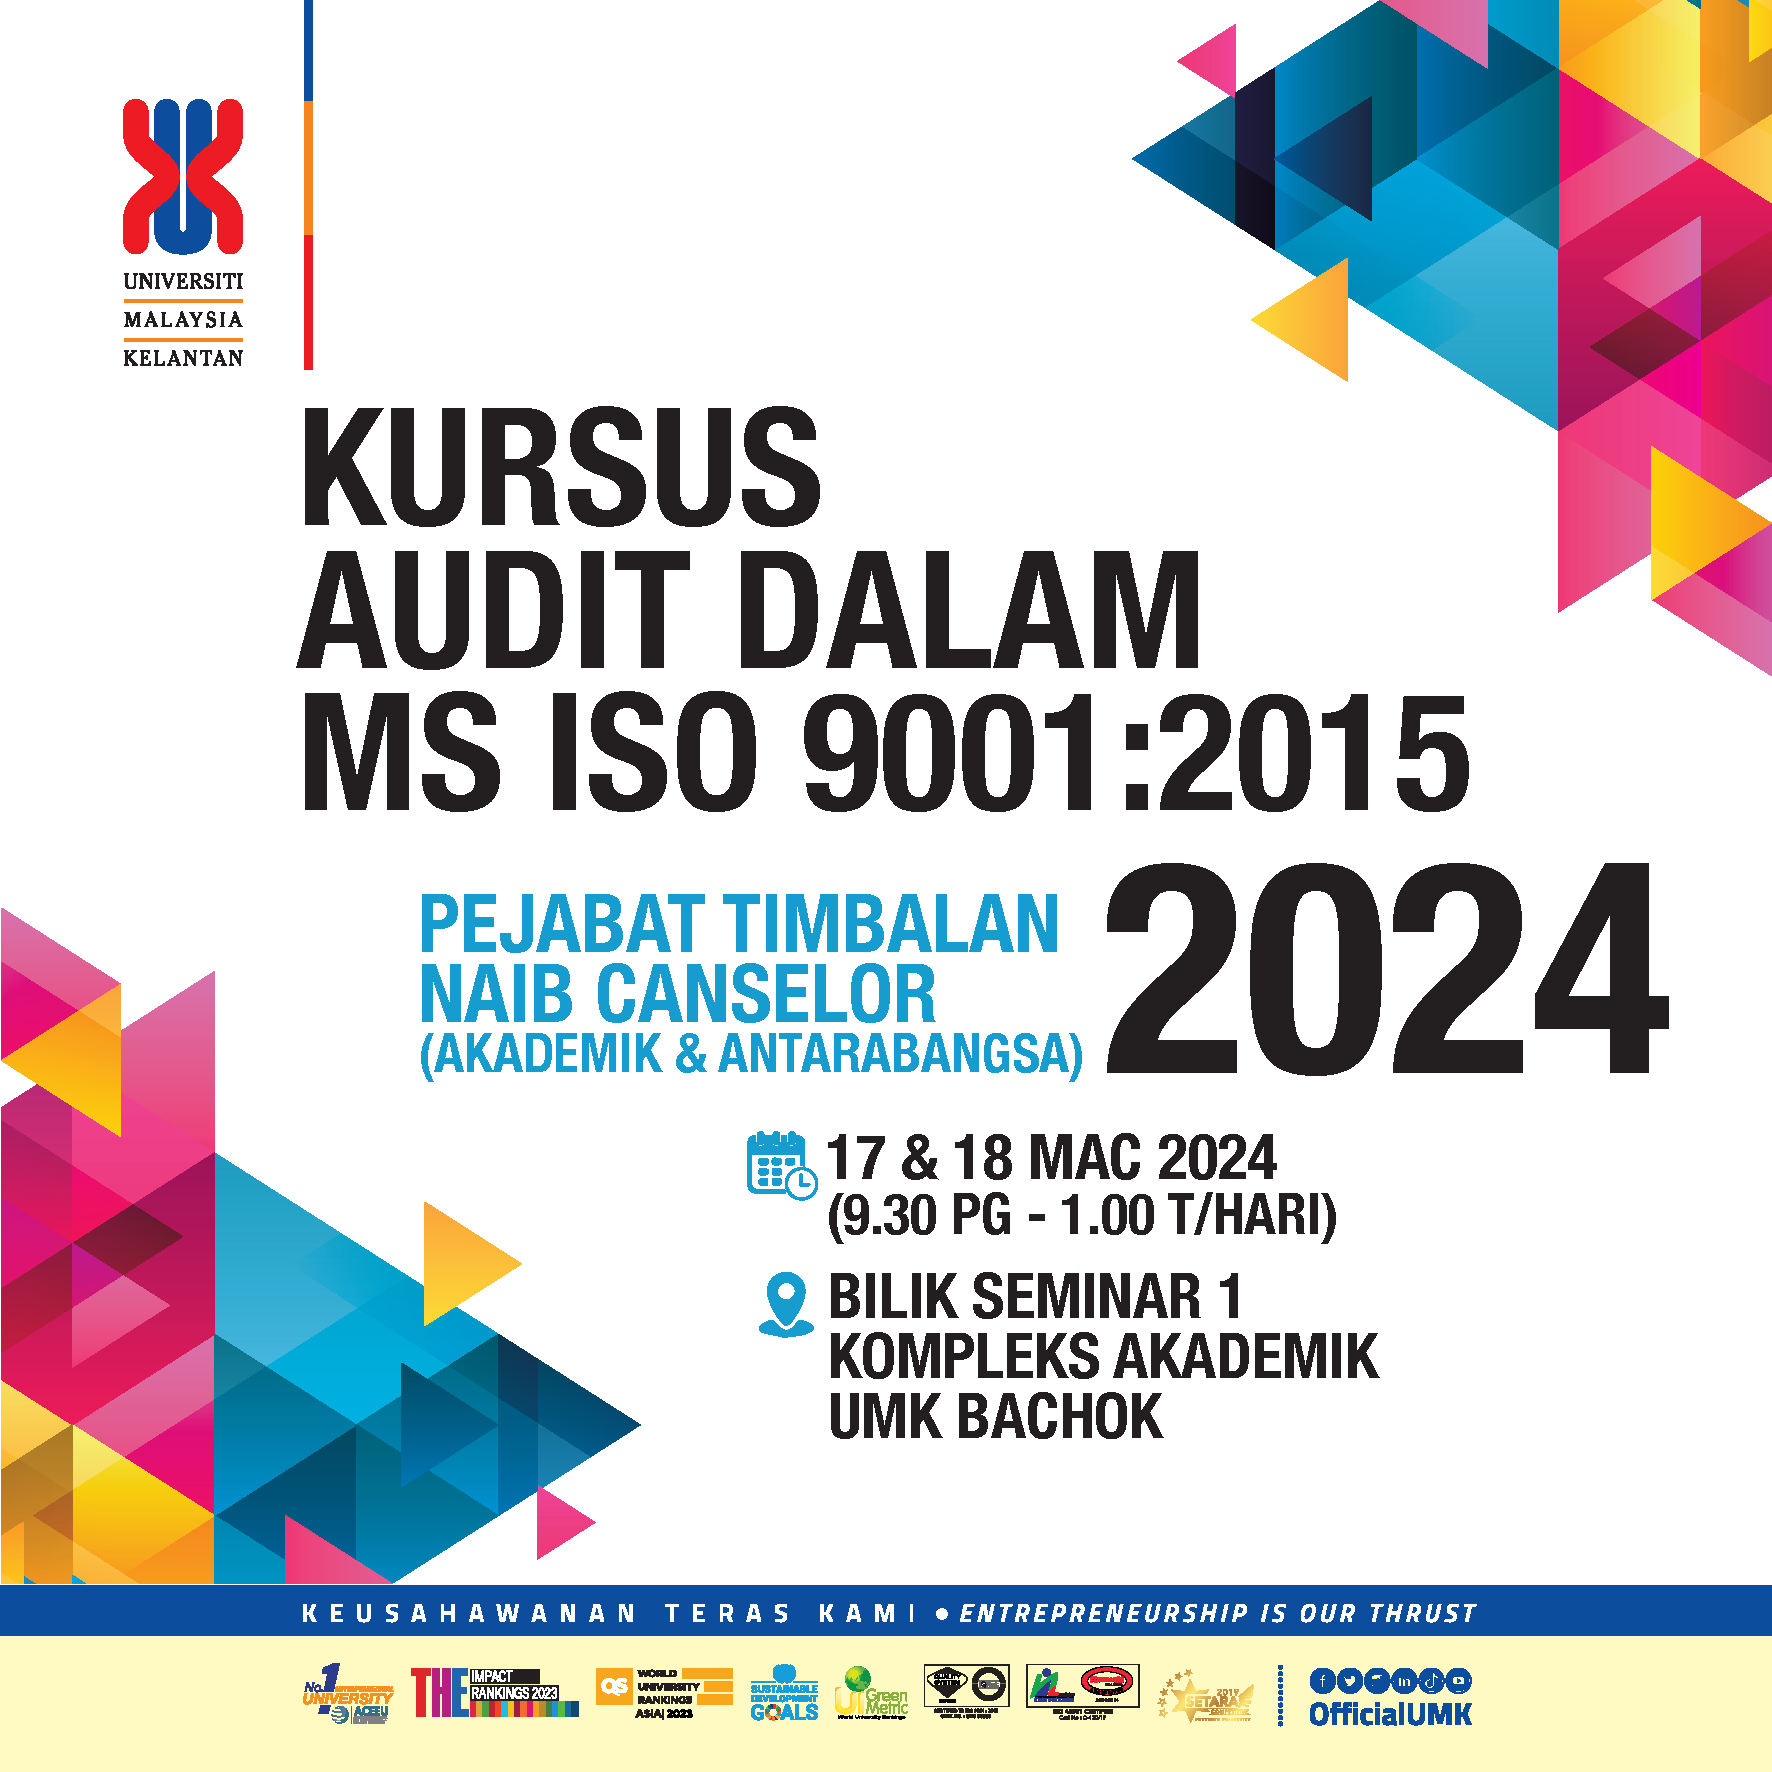 KURSUS AUDIT DALAM MS ISO 9001:2015 